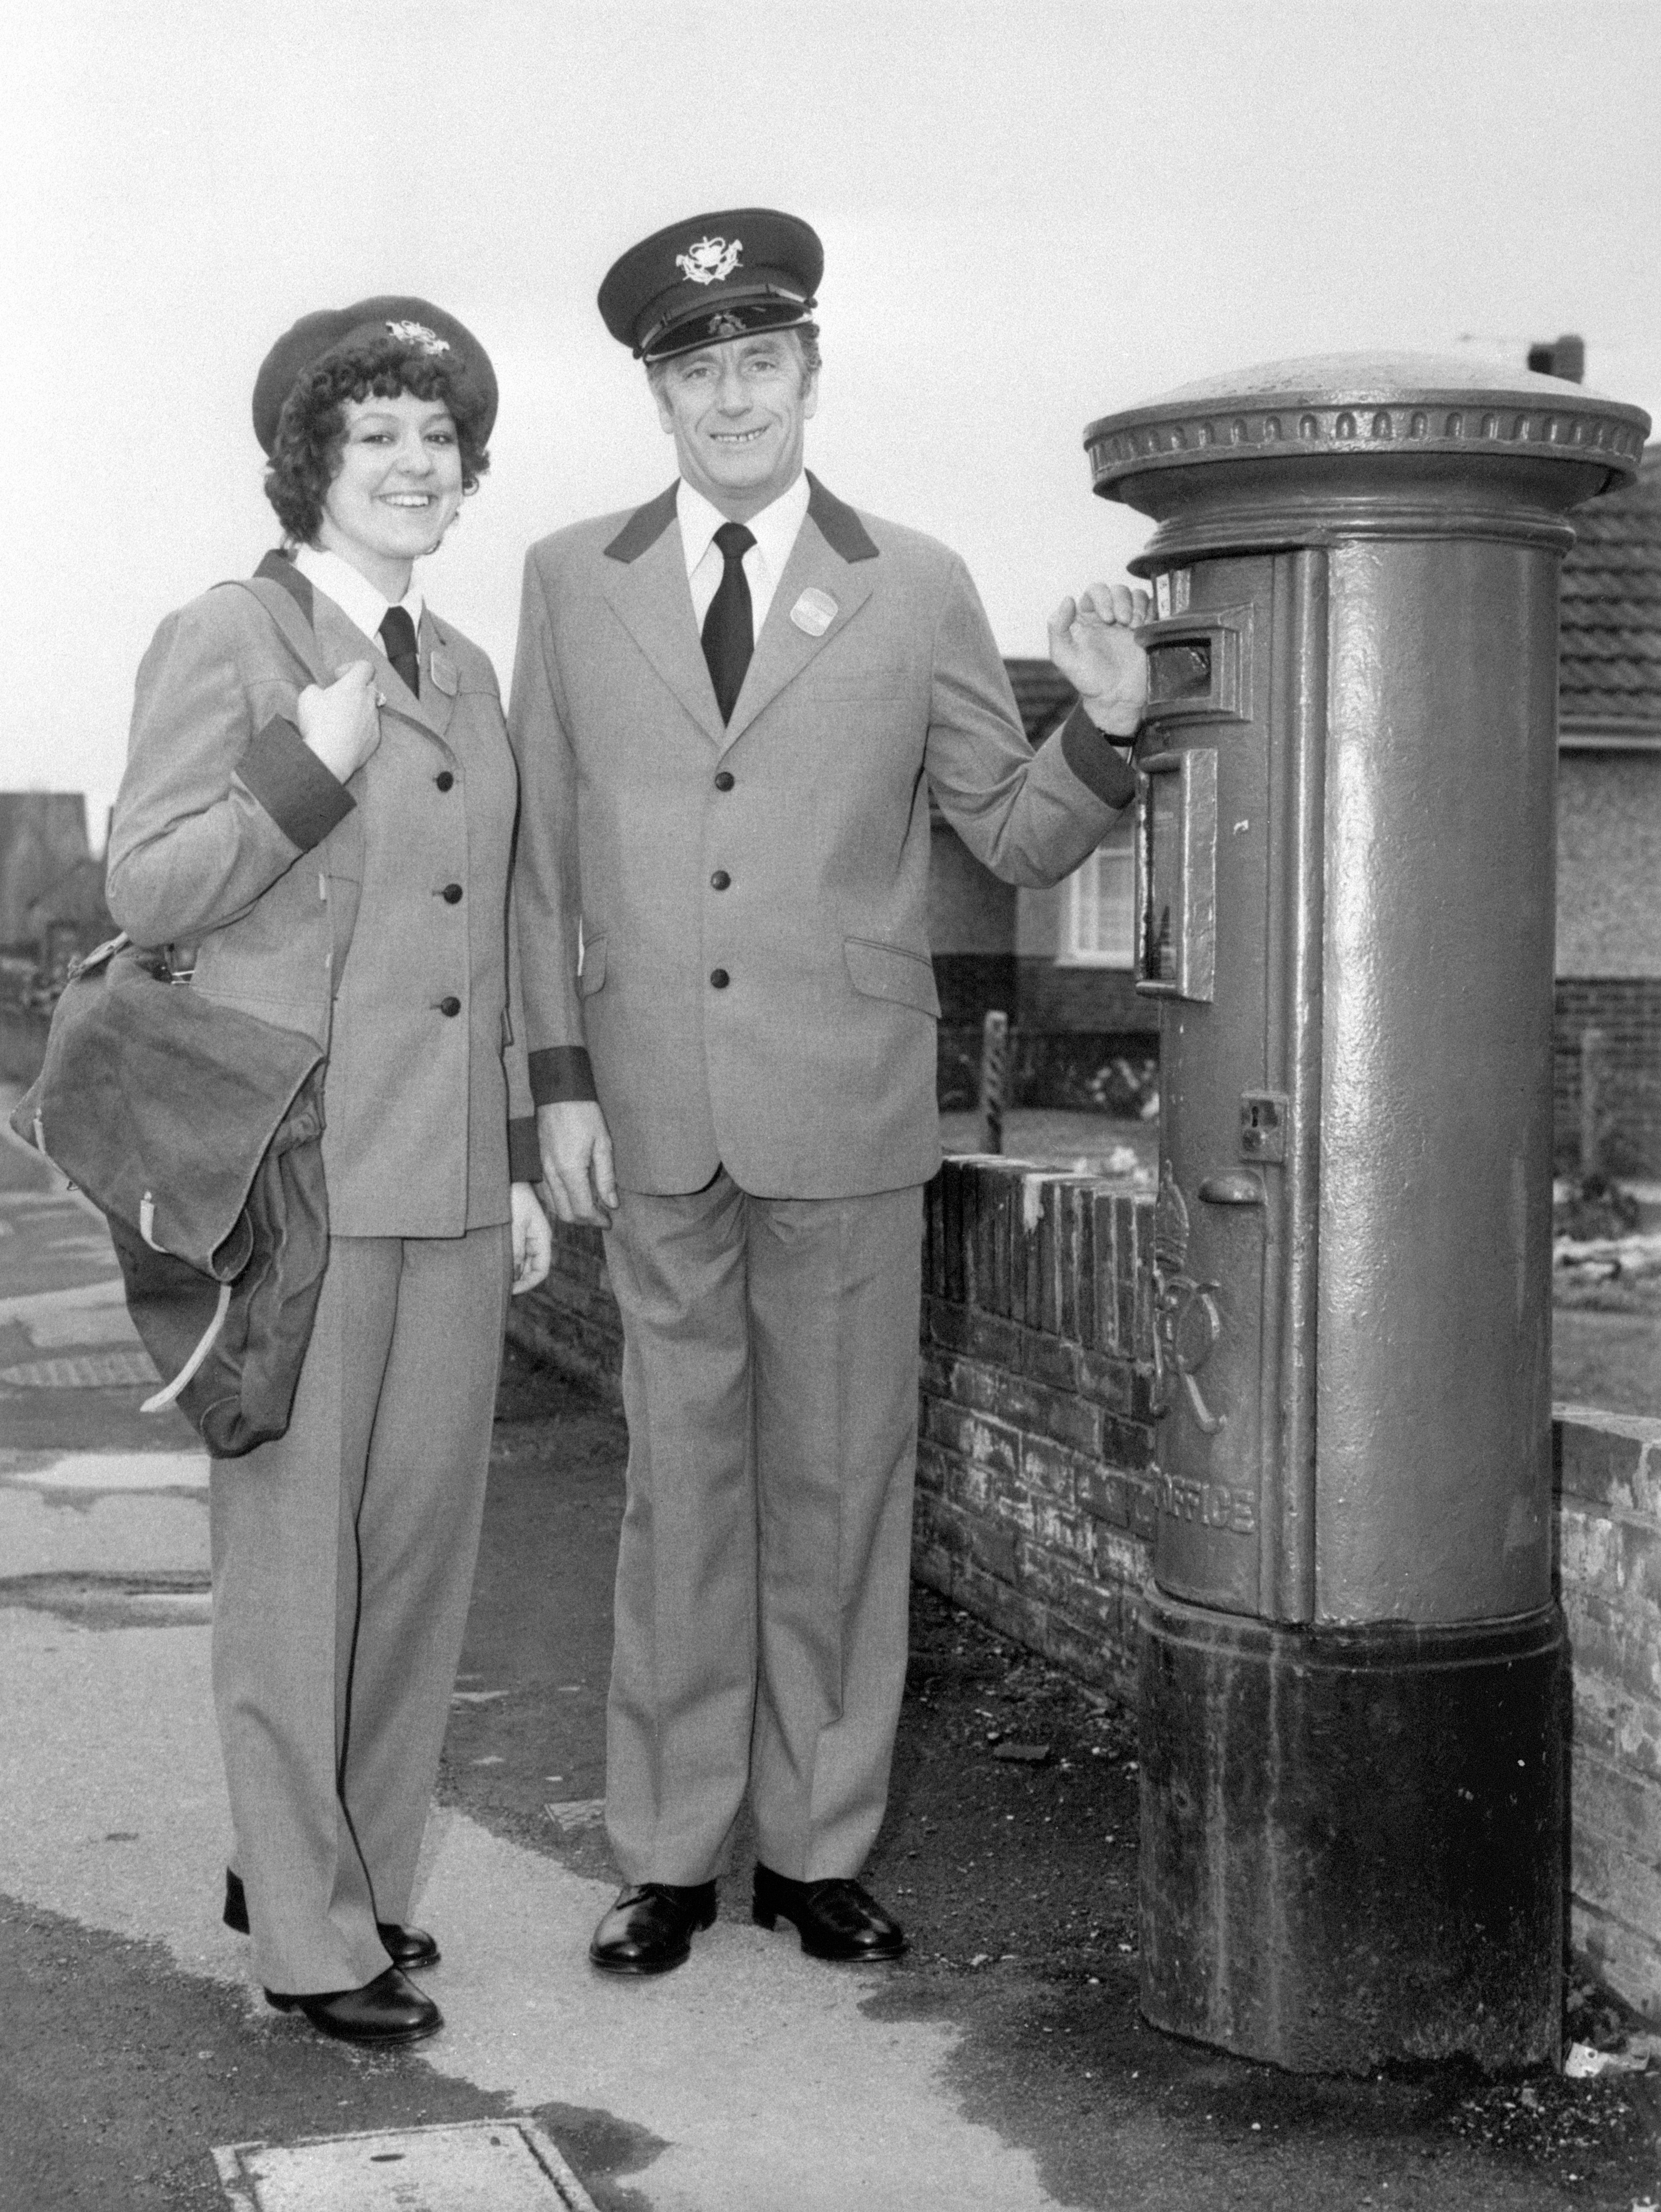 British Postal Service Trialling new uniforms in 1978